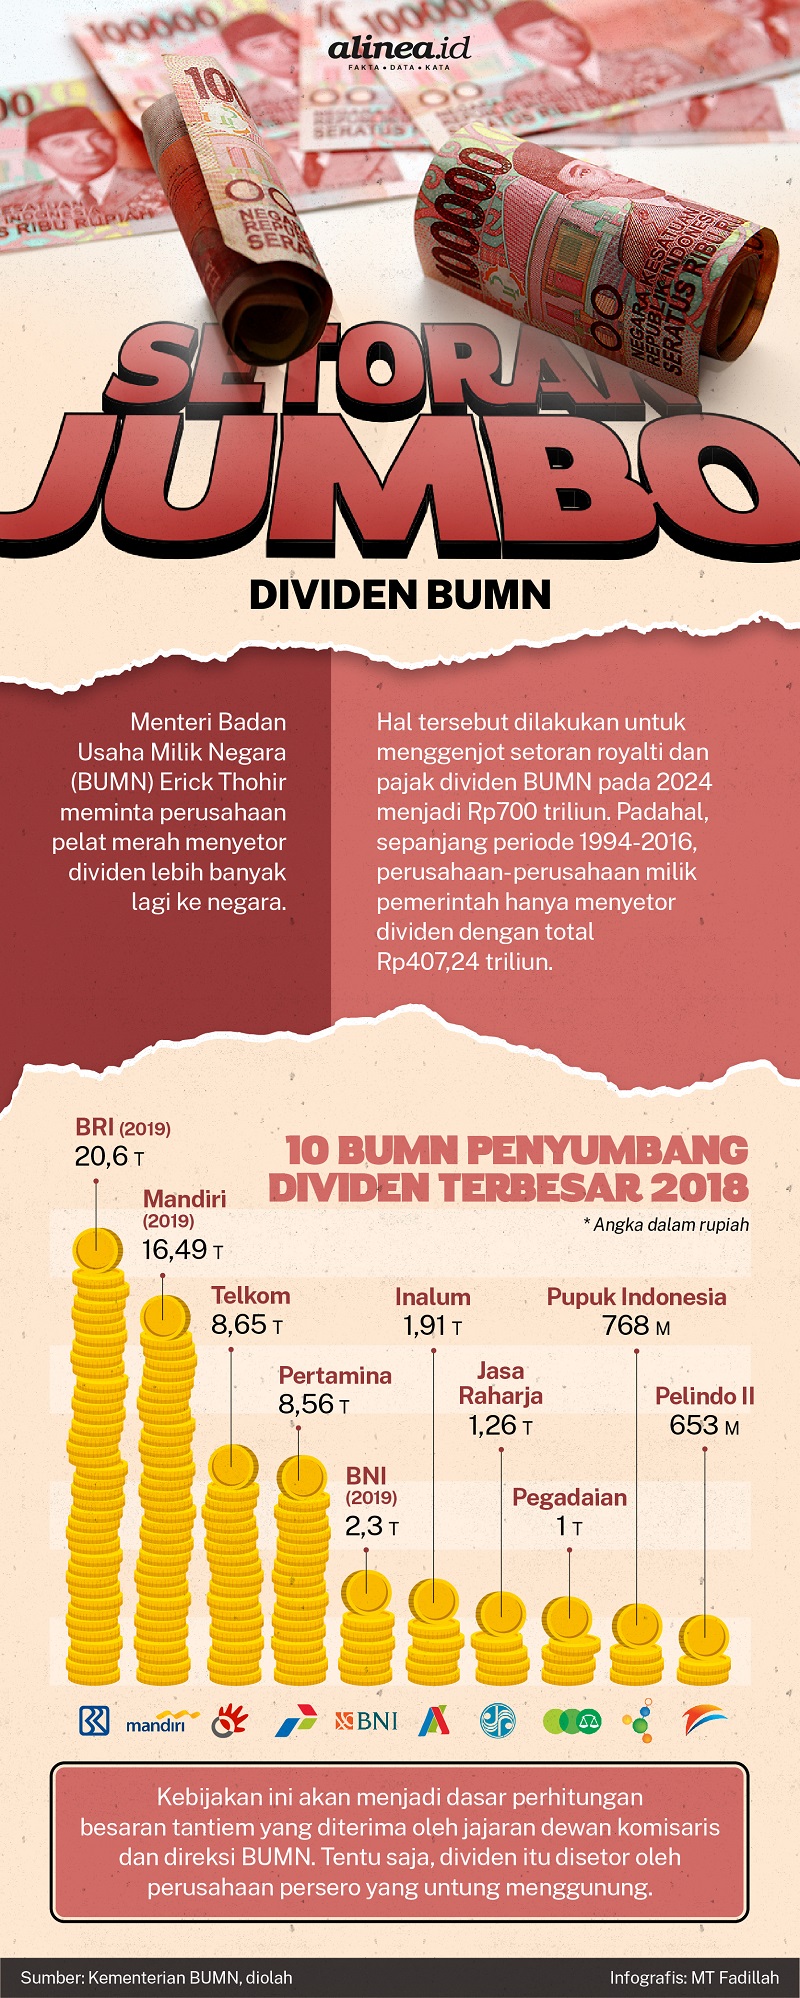 Infografik BUMN penyetor dividen terbesar bagi negara. Alinea.id/MT Fadillah